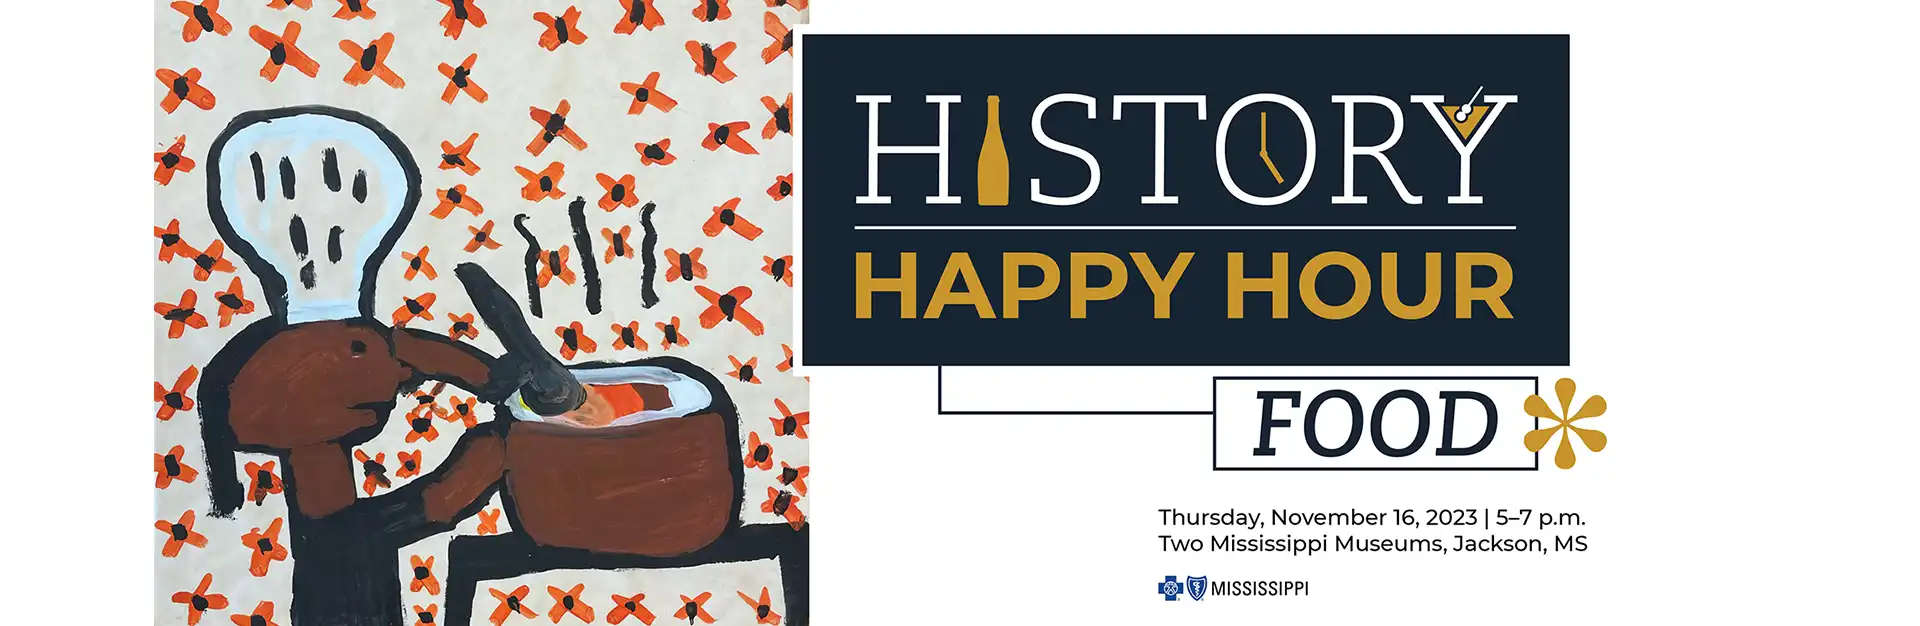 History Happy Hour: Food - Nov. 16, 2023